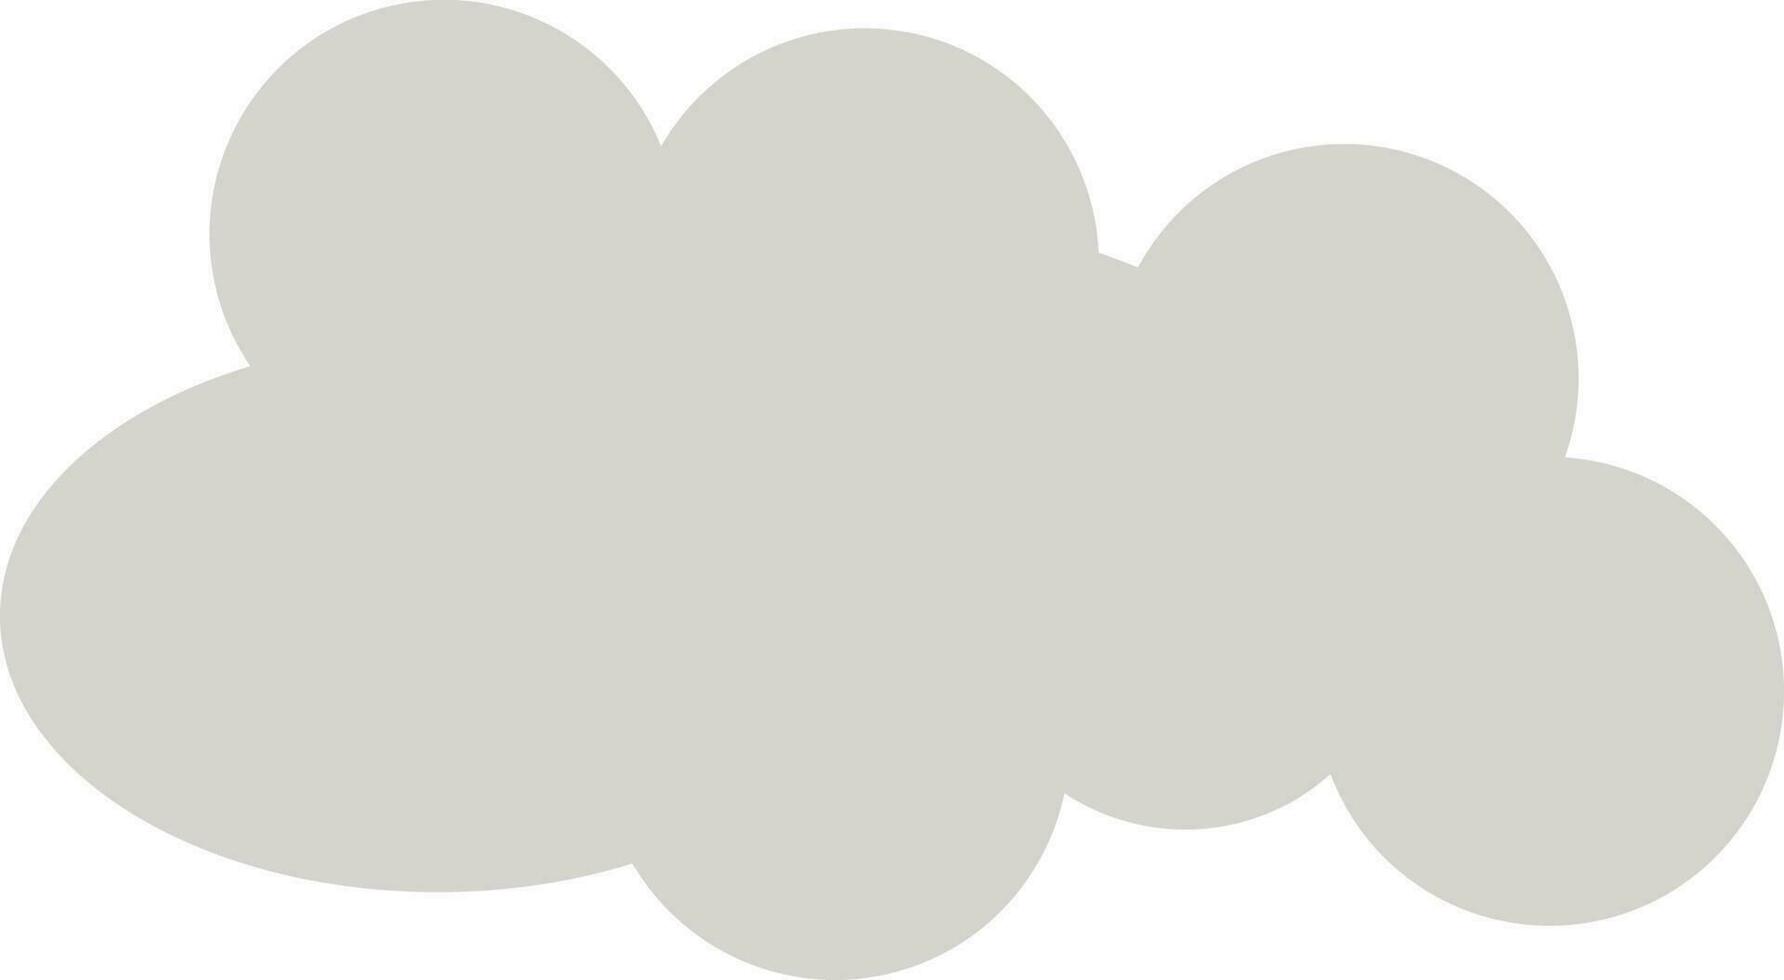 Illustration of gray cloud. vector